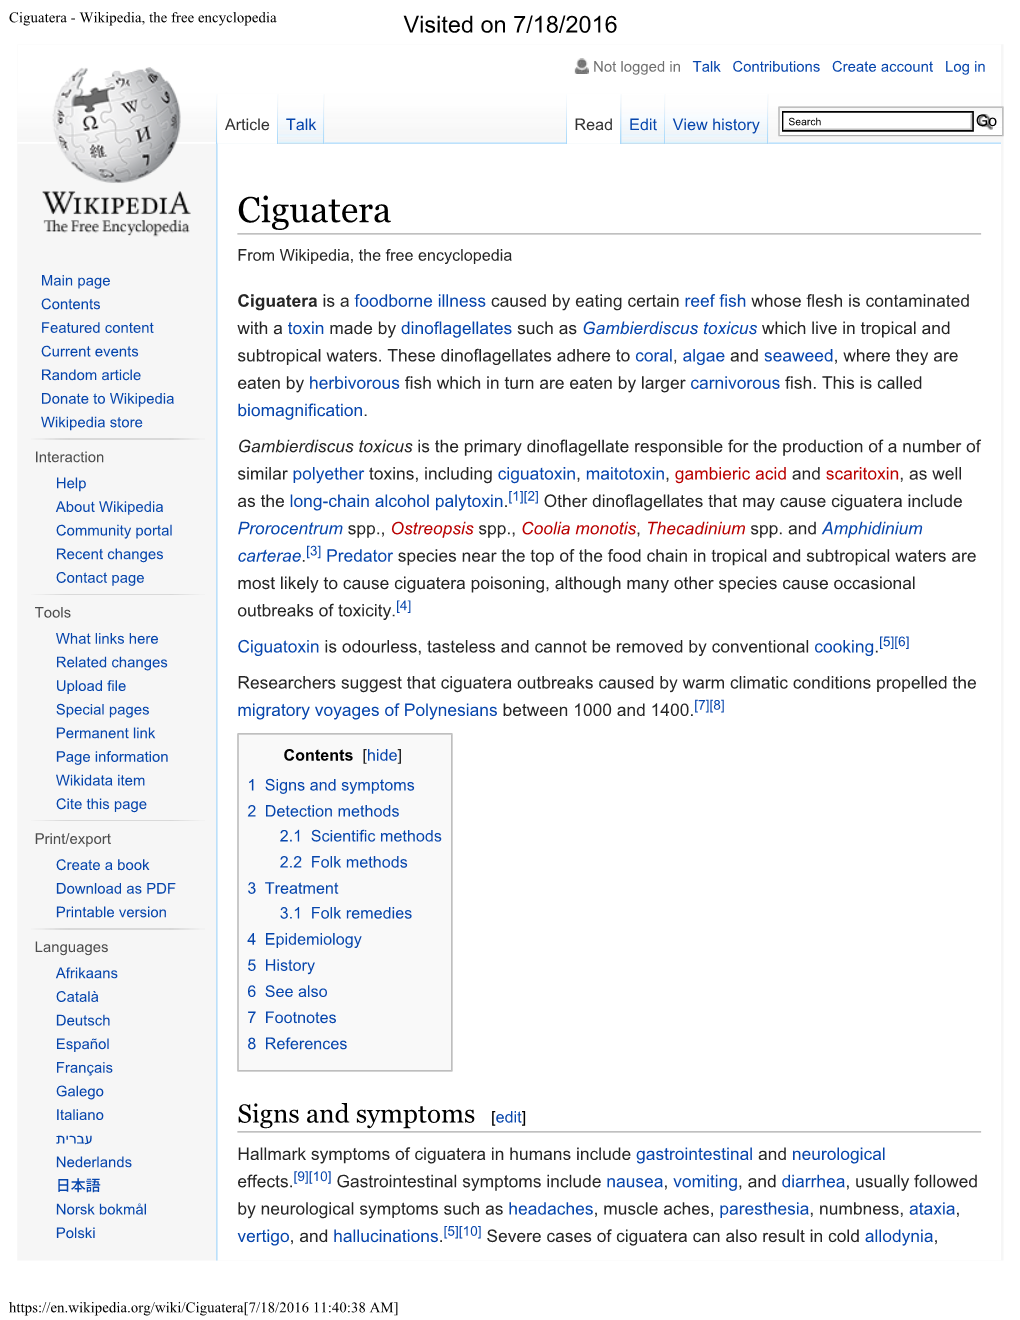 Ciguatera - Wikipedia, the Free Encyclopedia Visited on 7/18/2016